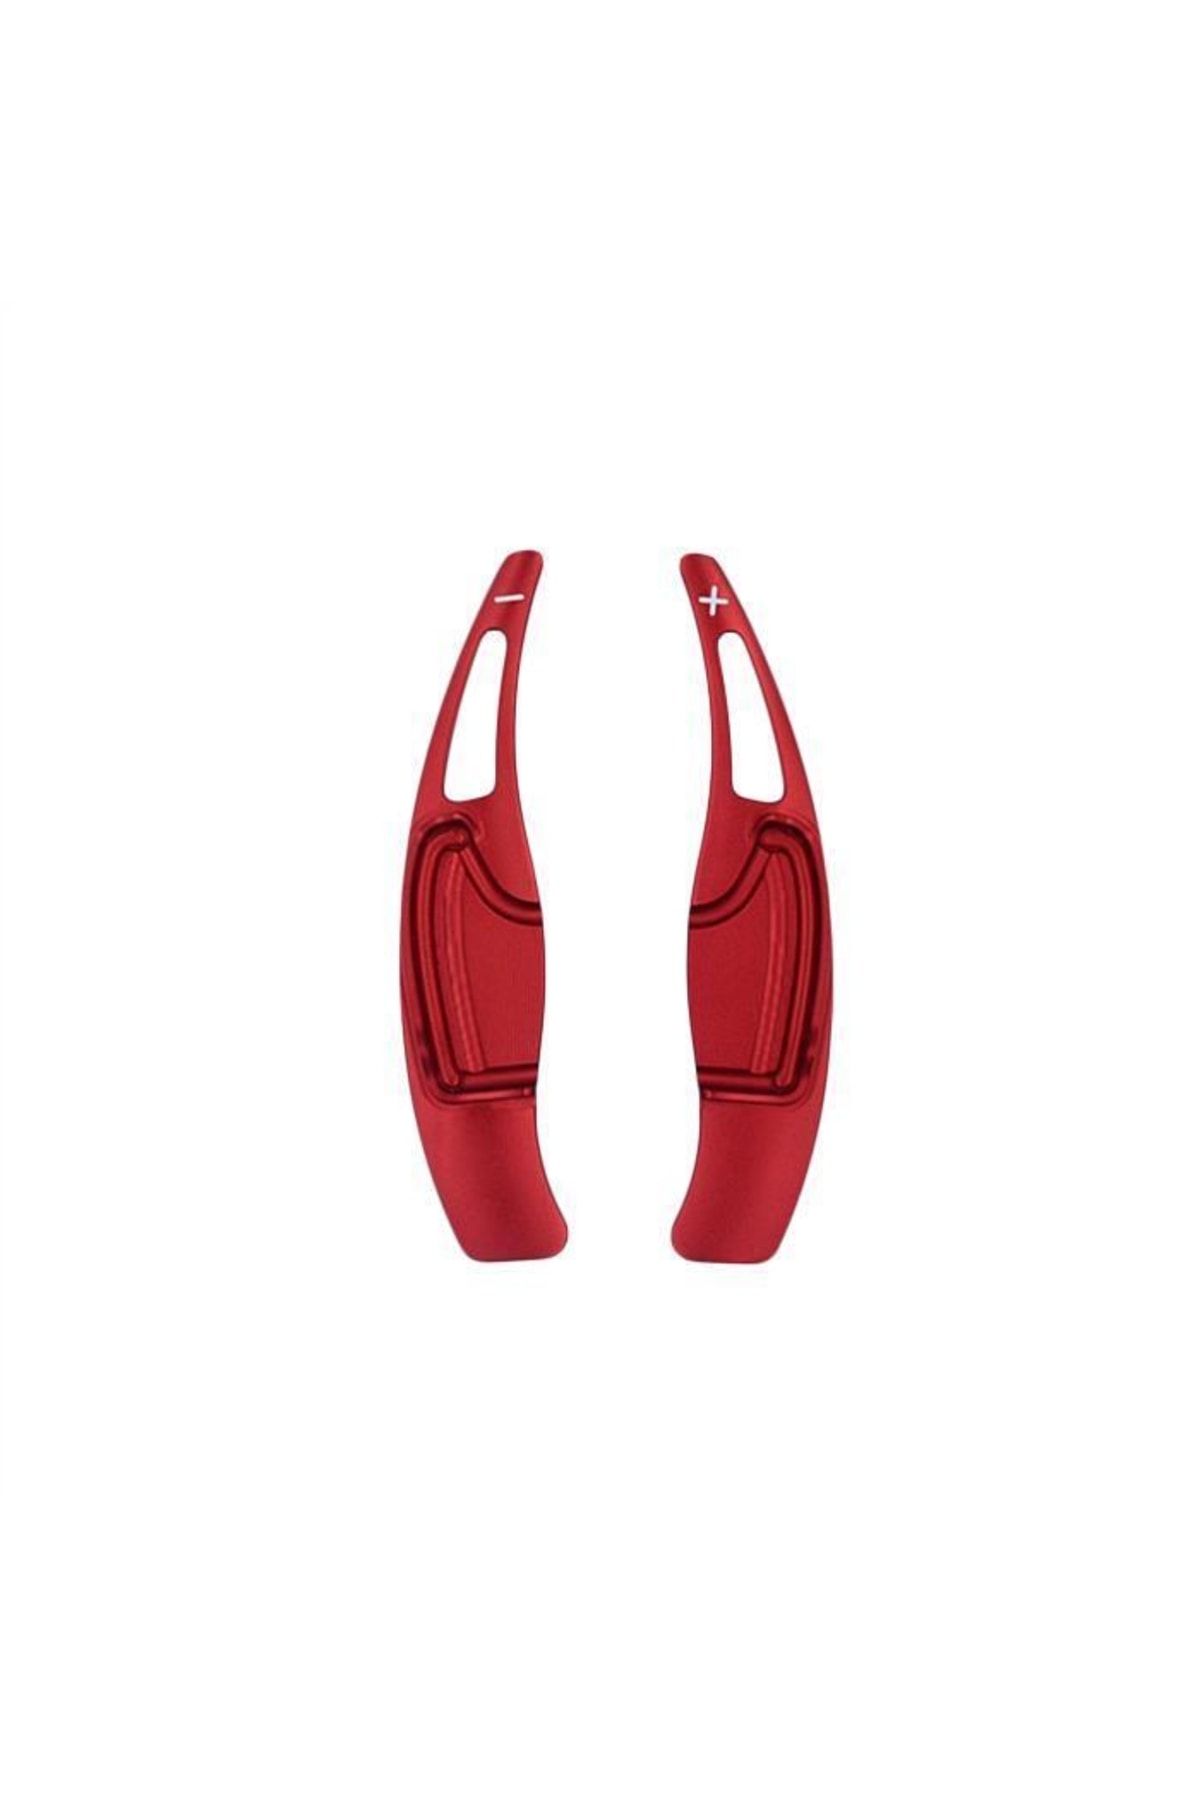 OLED GARAJ Honda Civic İçin Uyumlu Fb7 F1 Vites Kulakçık Pedal Shıft Paddel Shift Kırmızı 2012-2015